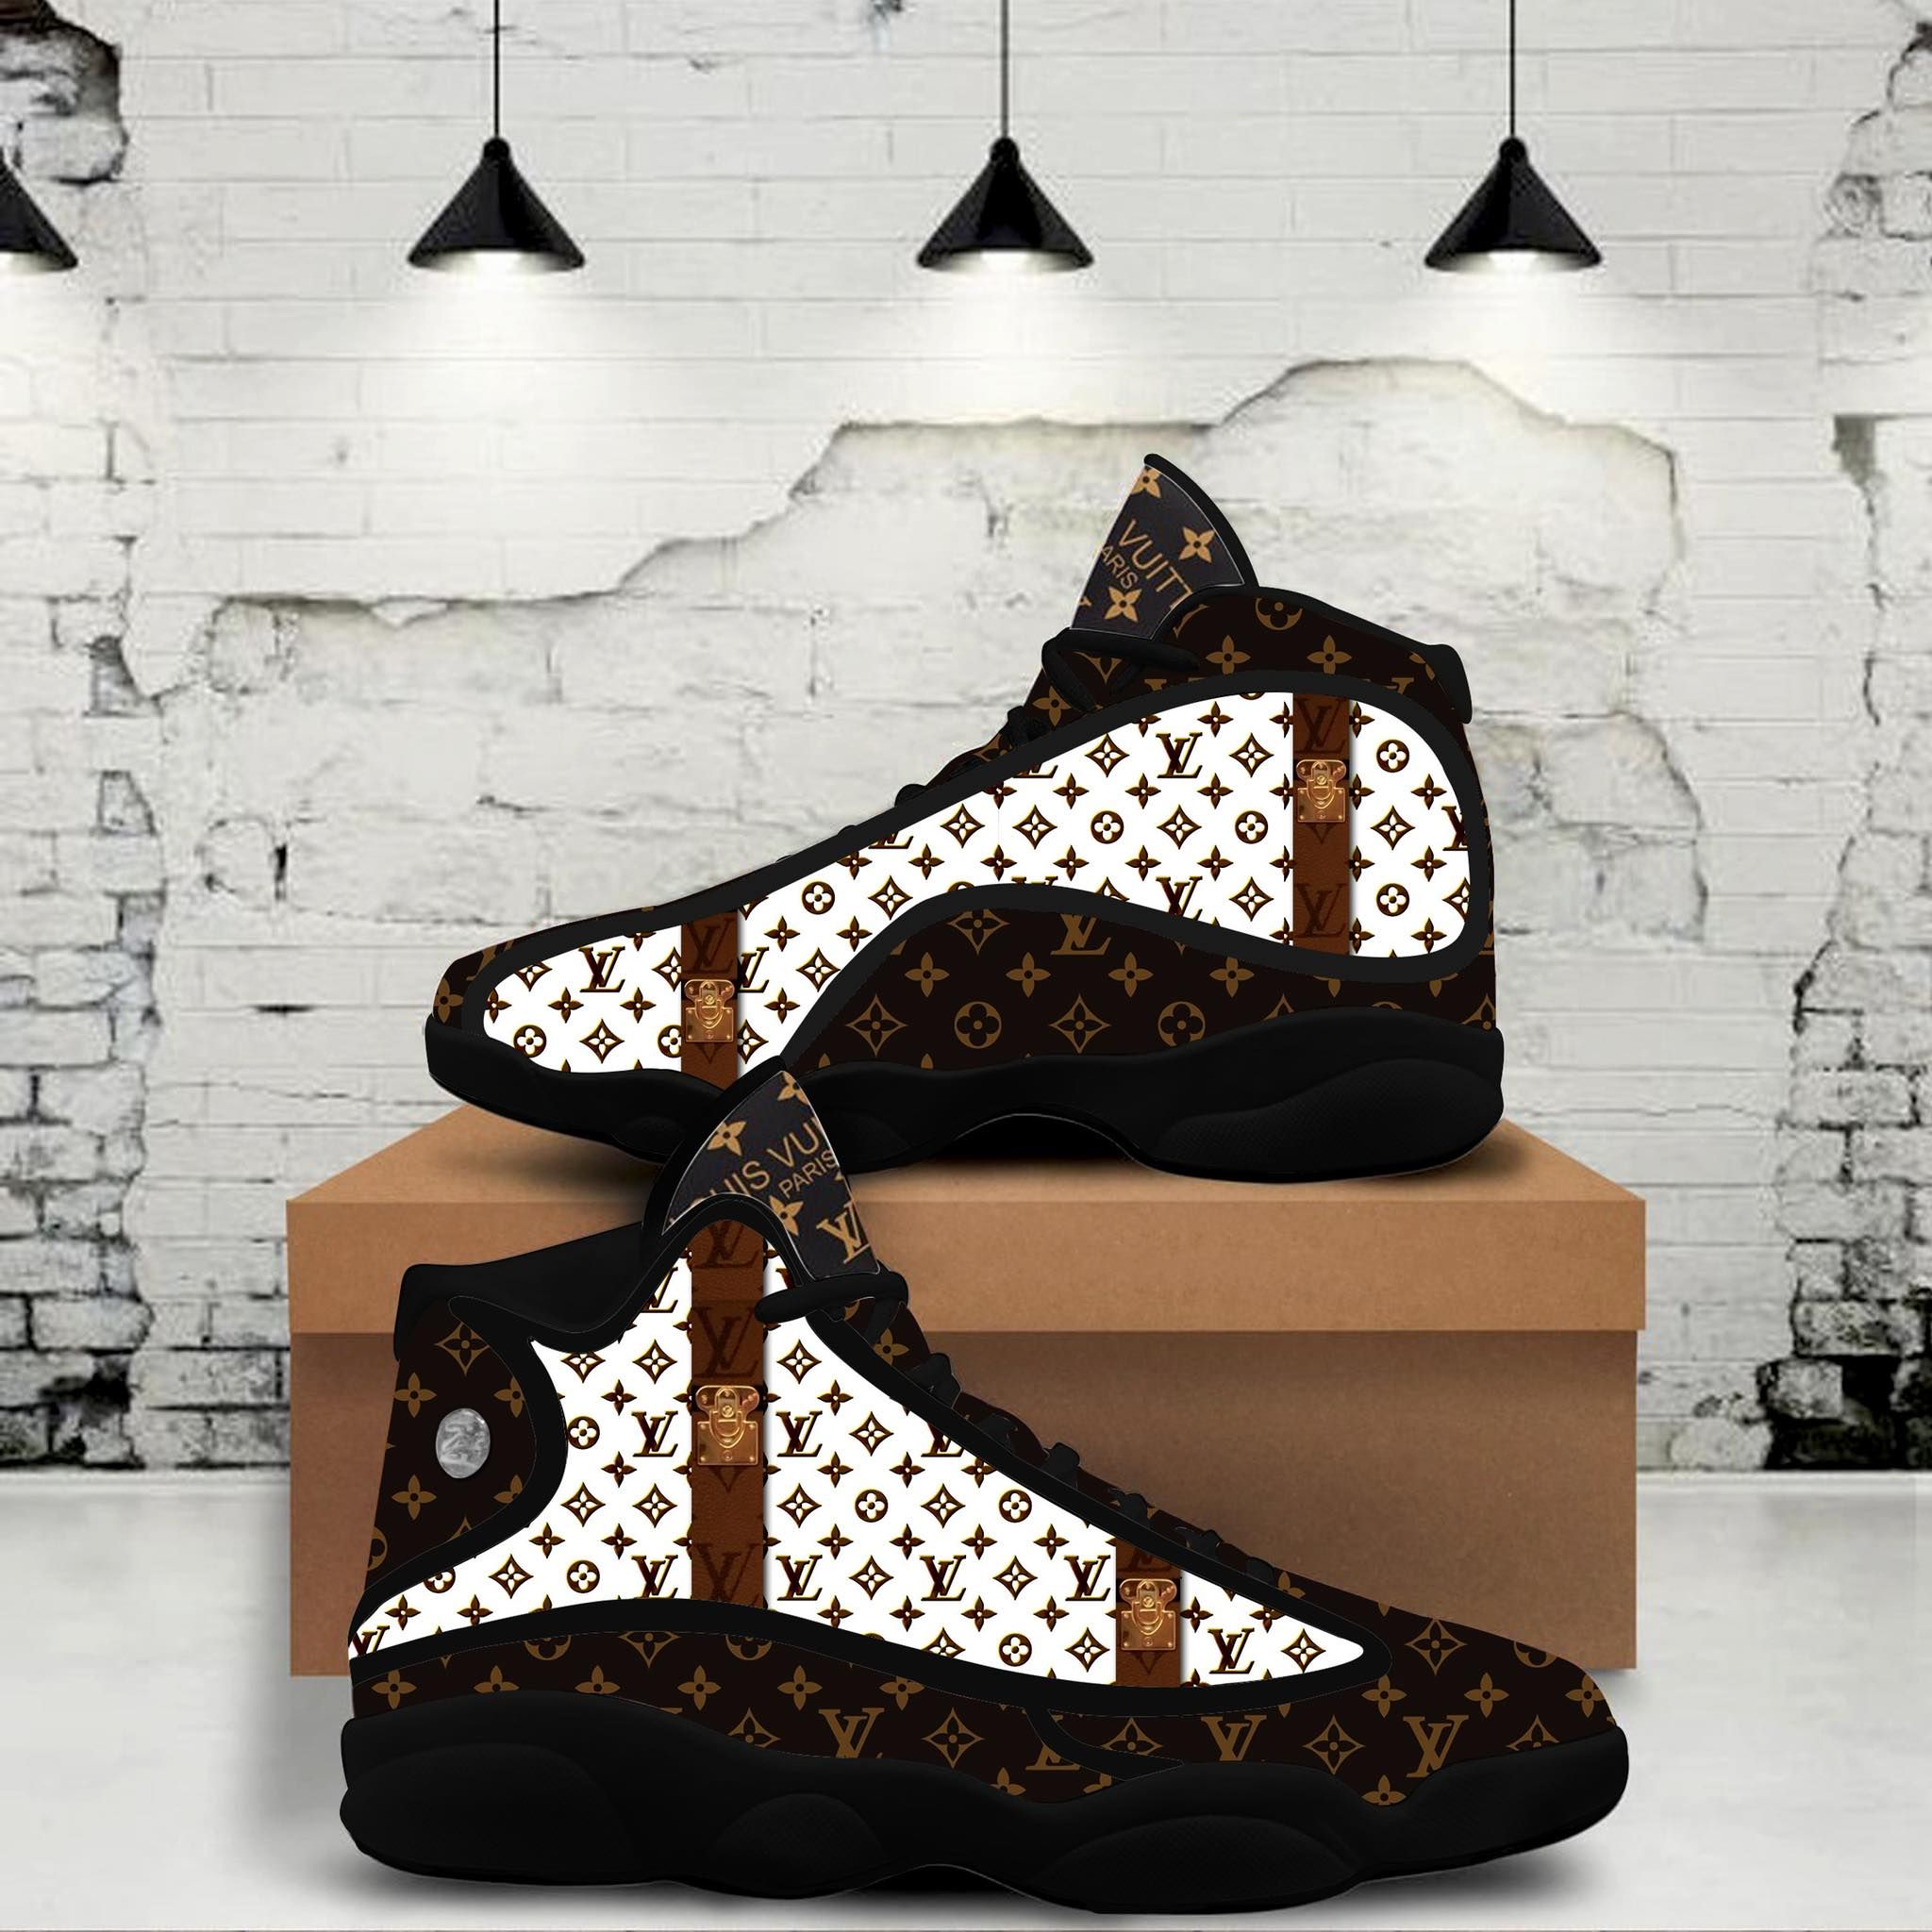 Luxury Louis Vuitton LV Air Jordan 13 Sneakers Shoes Brown White Gifts For  Men Women